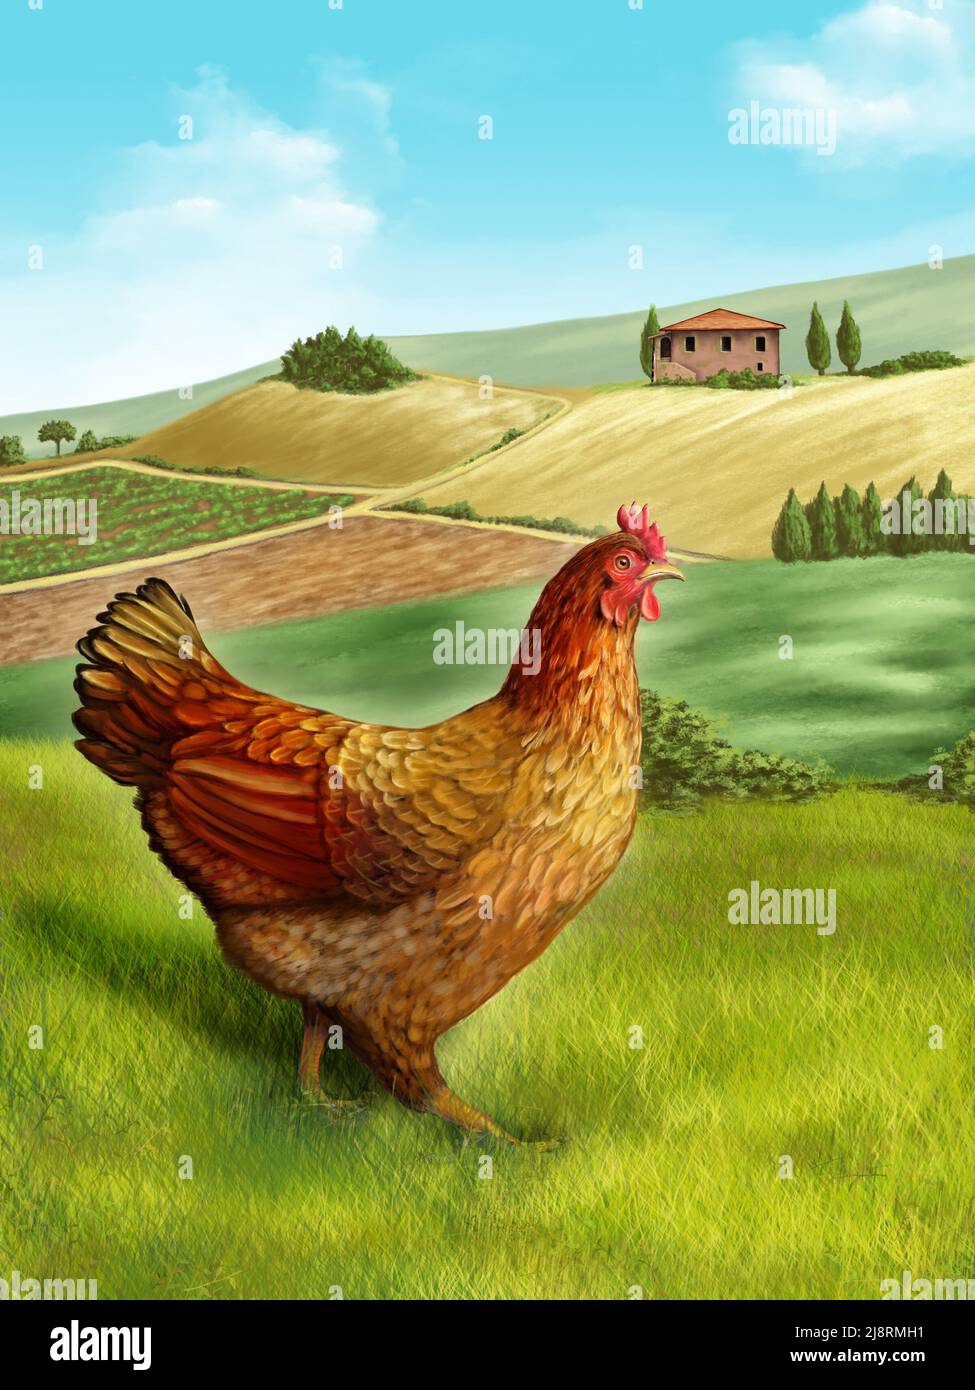 Hen in a beautiful rural landscape. Digital illustration. Stock Photo